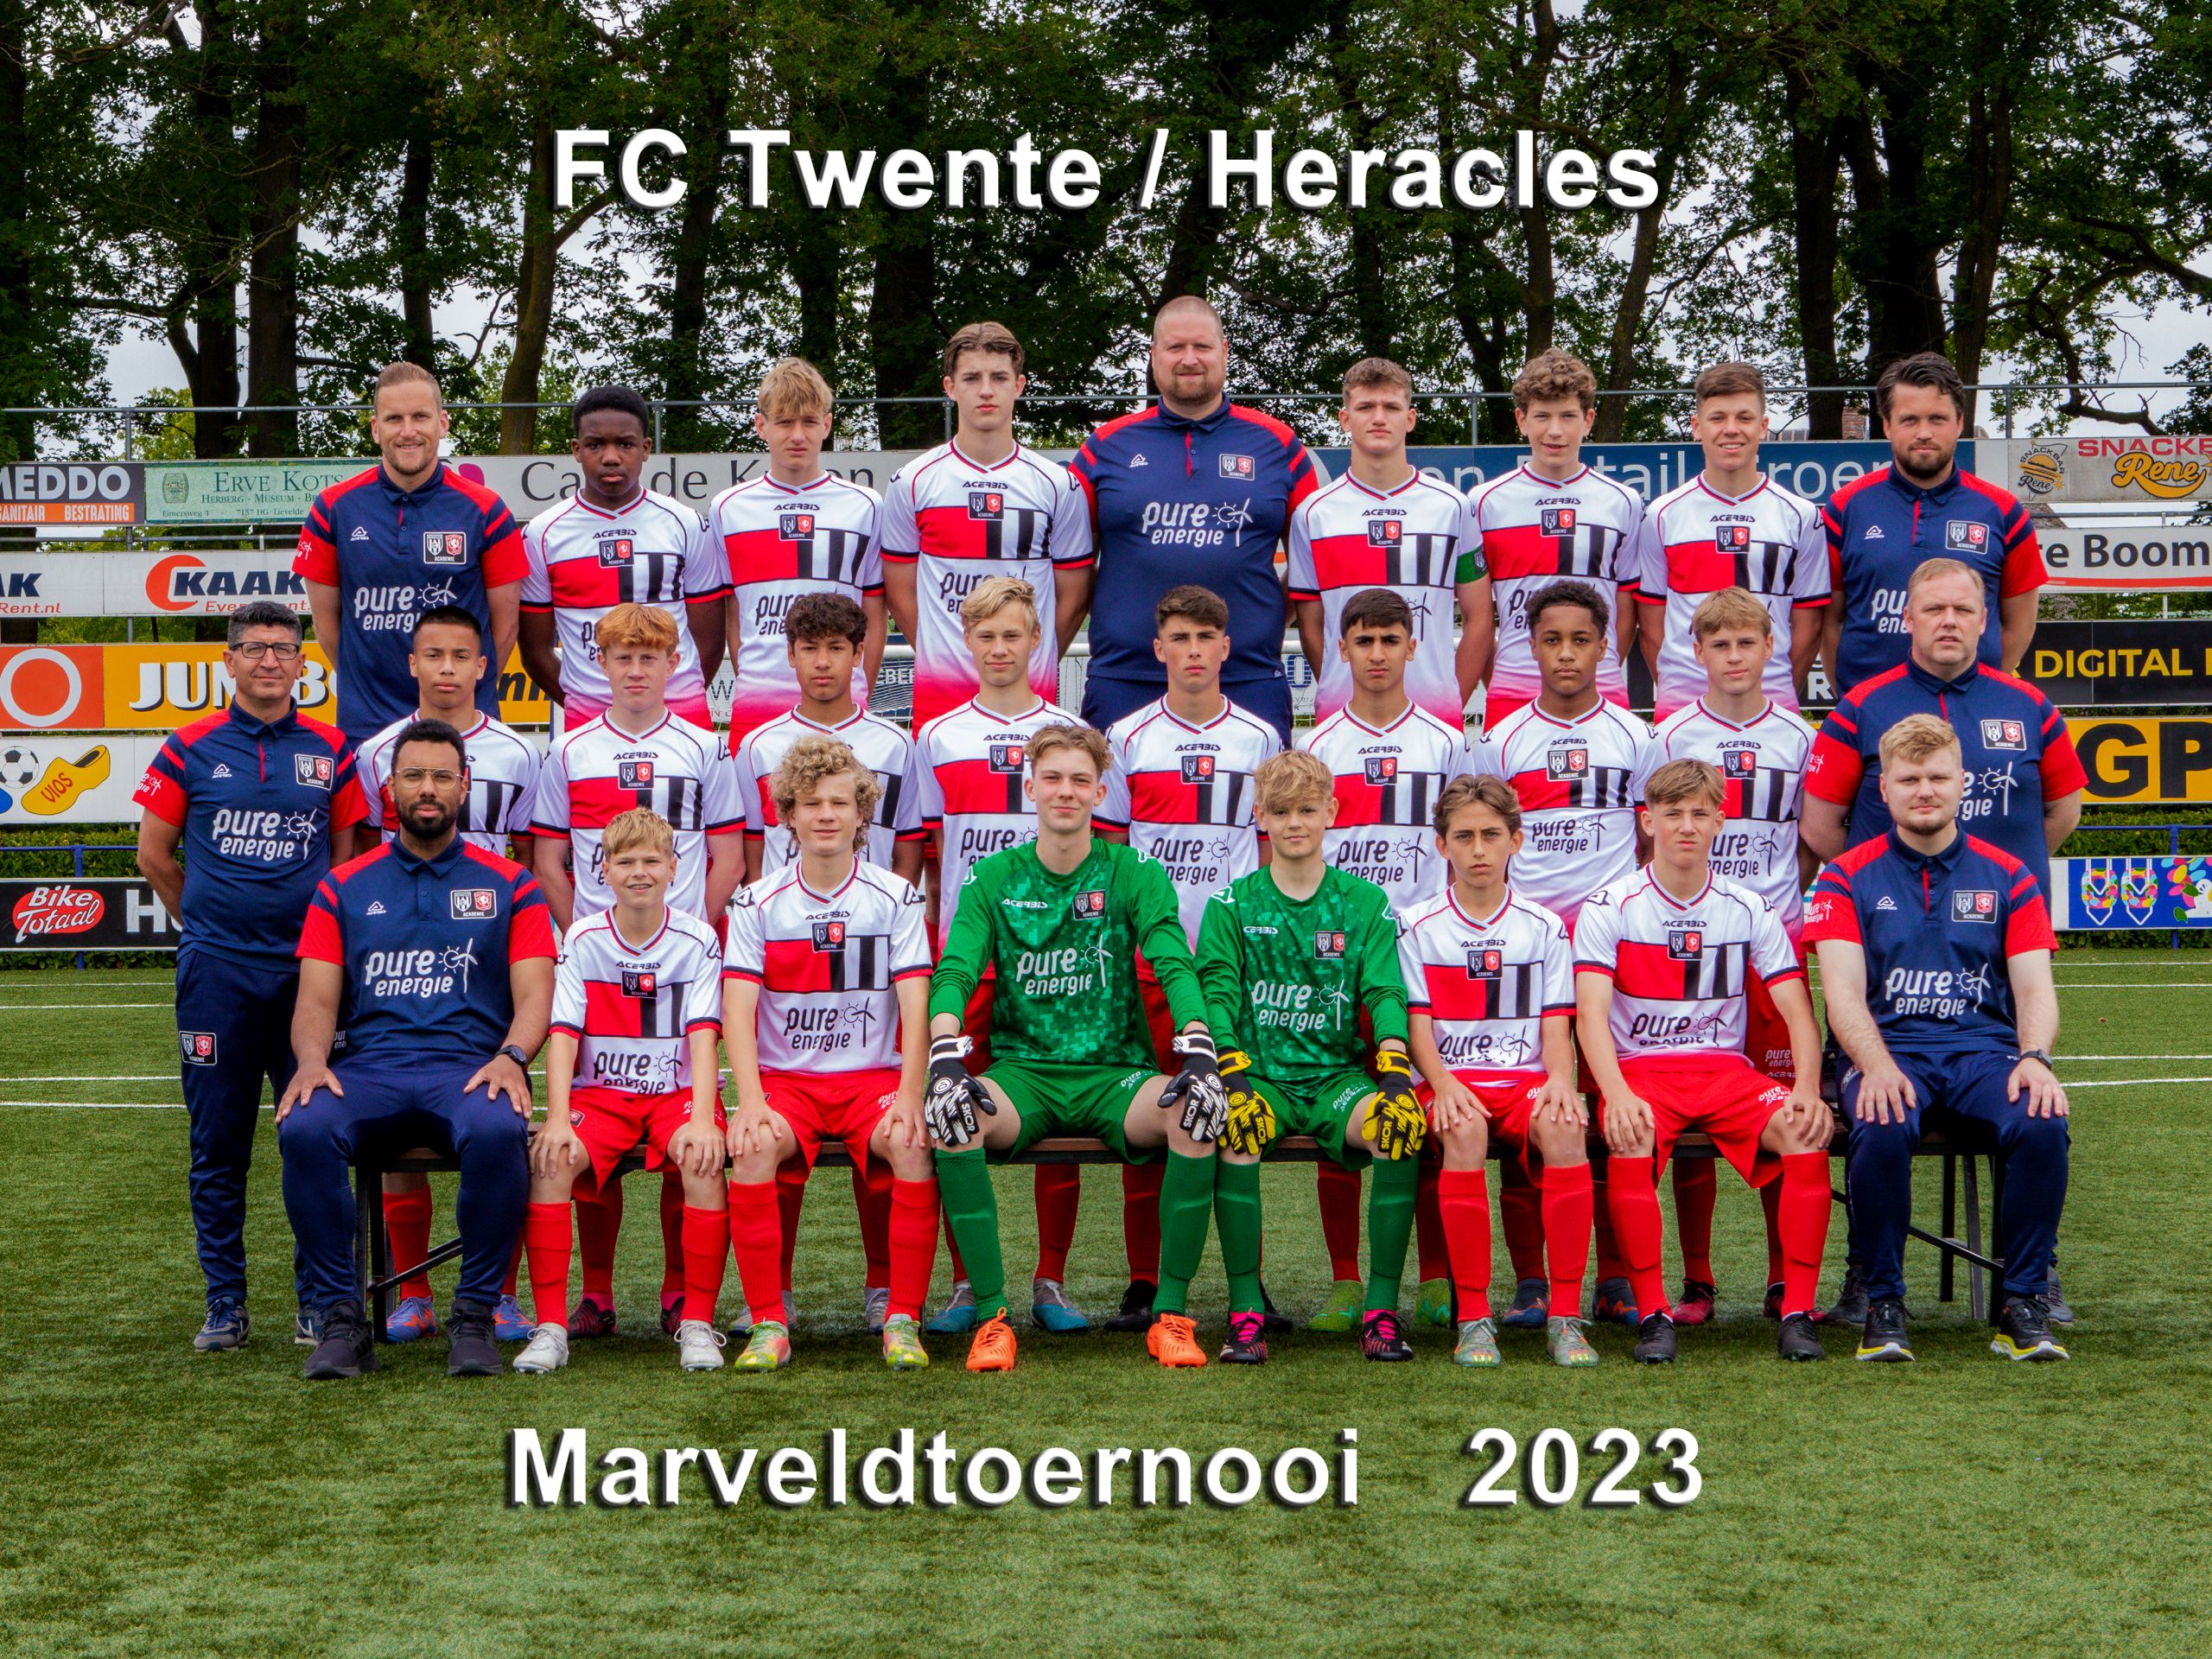 Marveld Tournament 2023 - Team FC Twente/Heracles